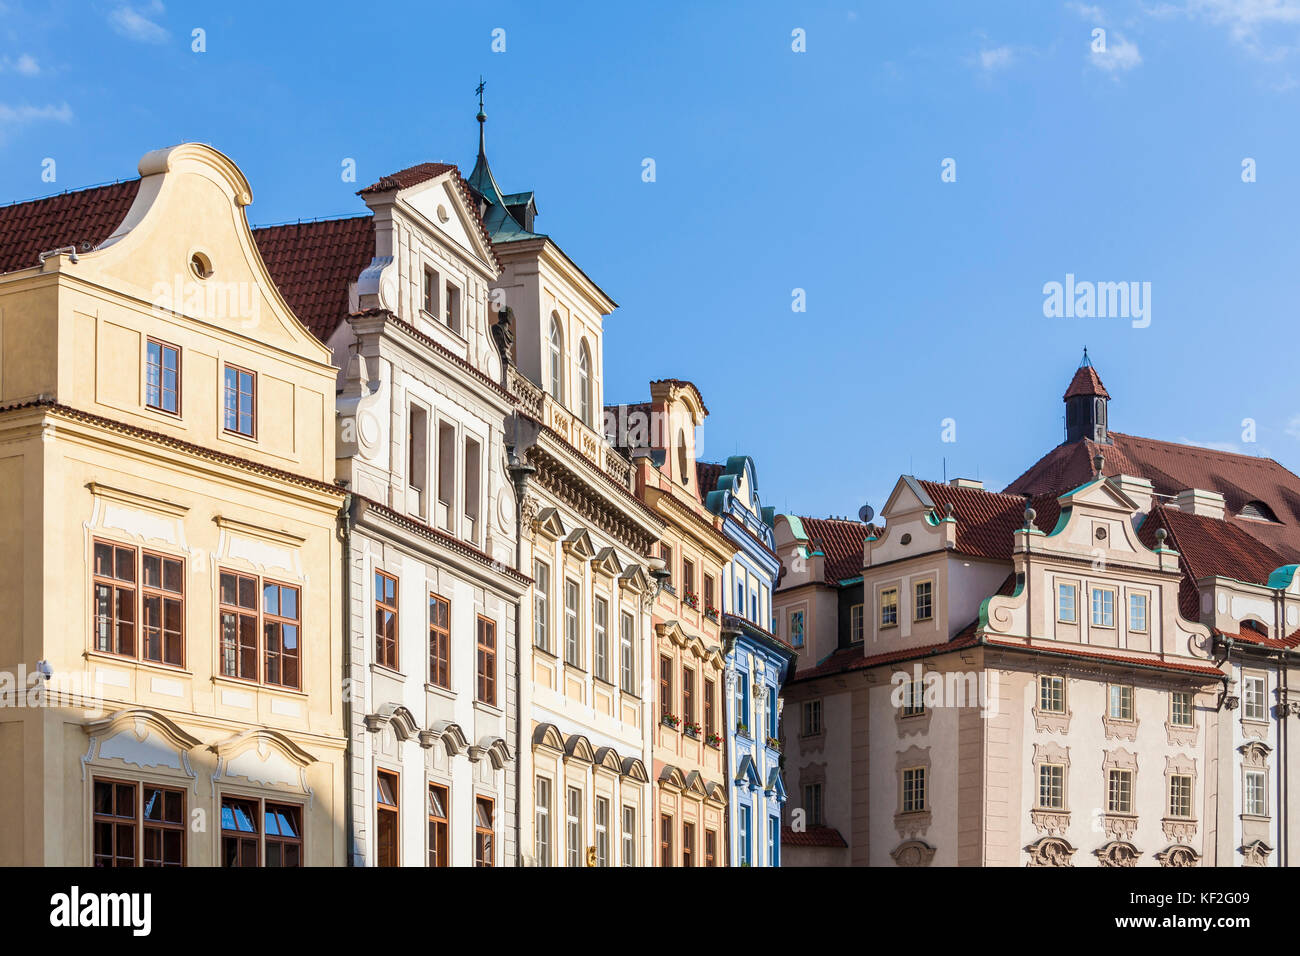 Tschechien, Prag, Altstadt, Altstädter Ring, typische Hausfassaden, Häuser Stock Photo